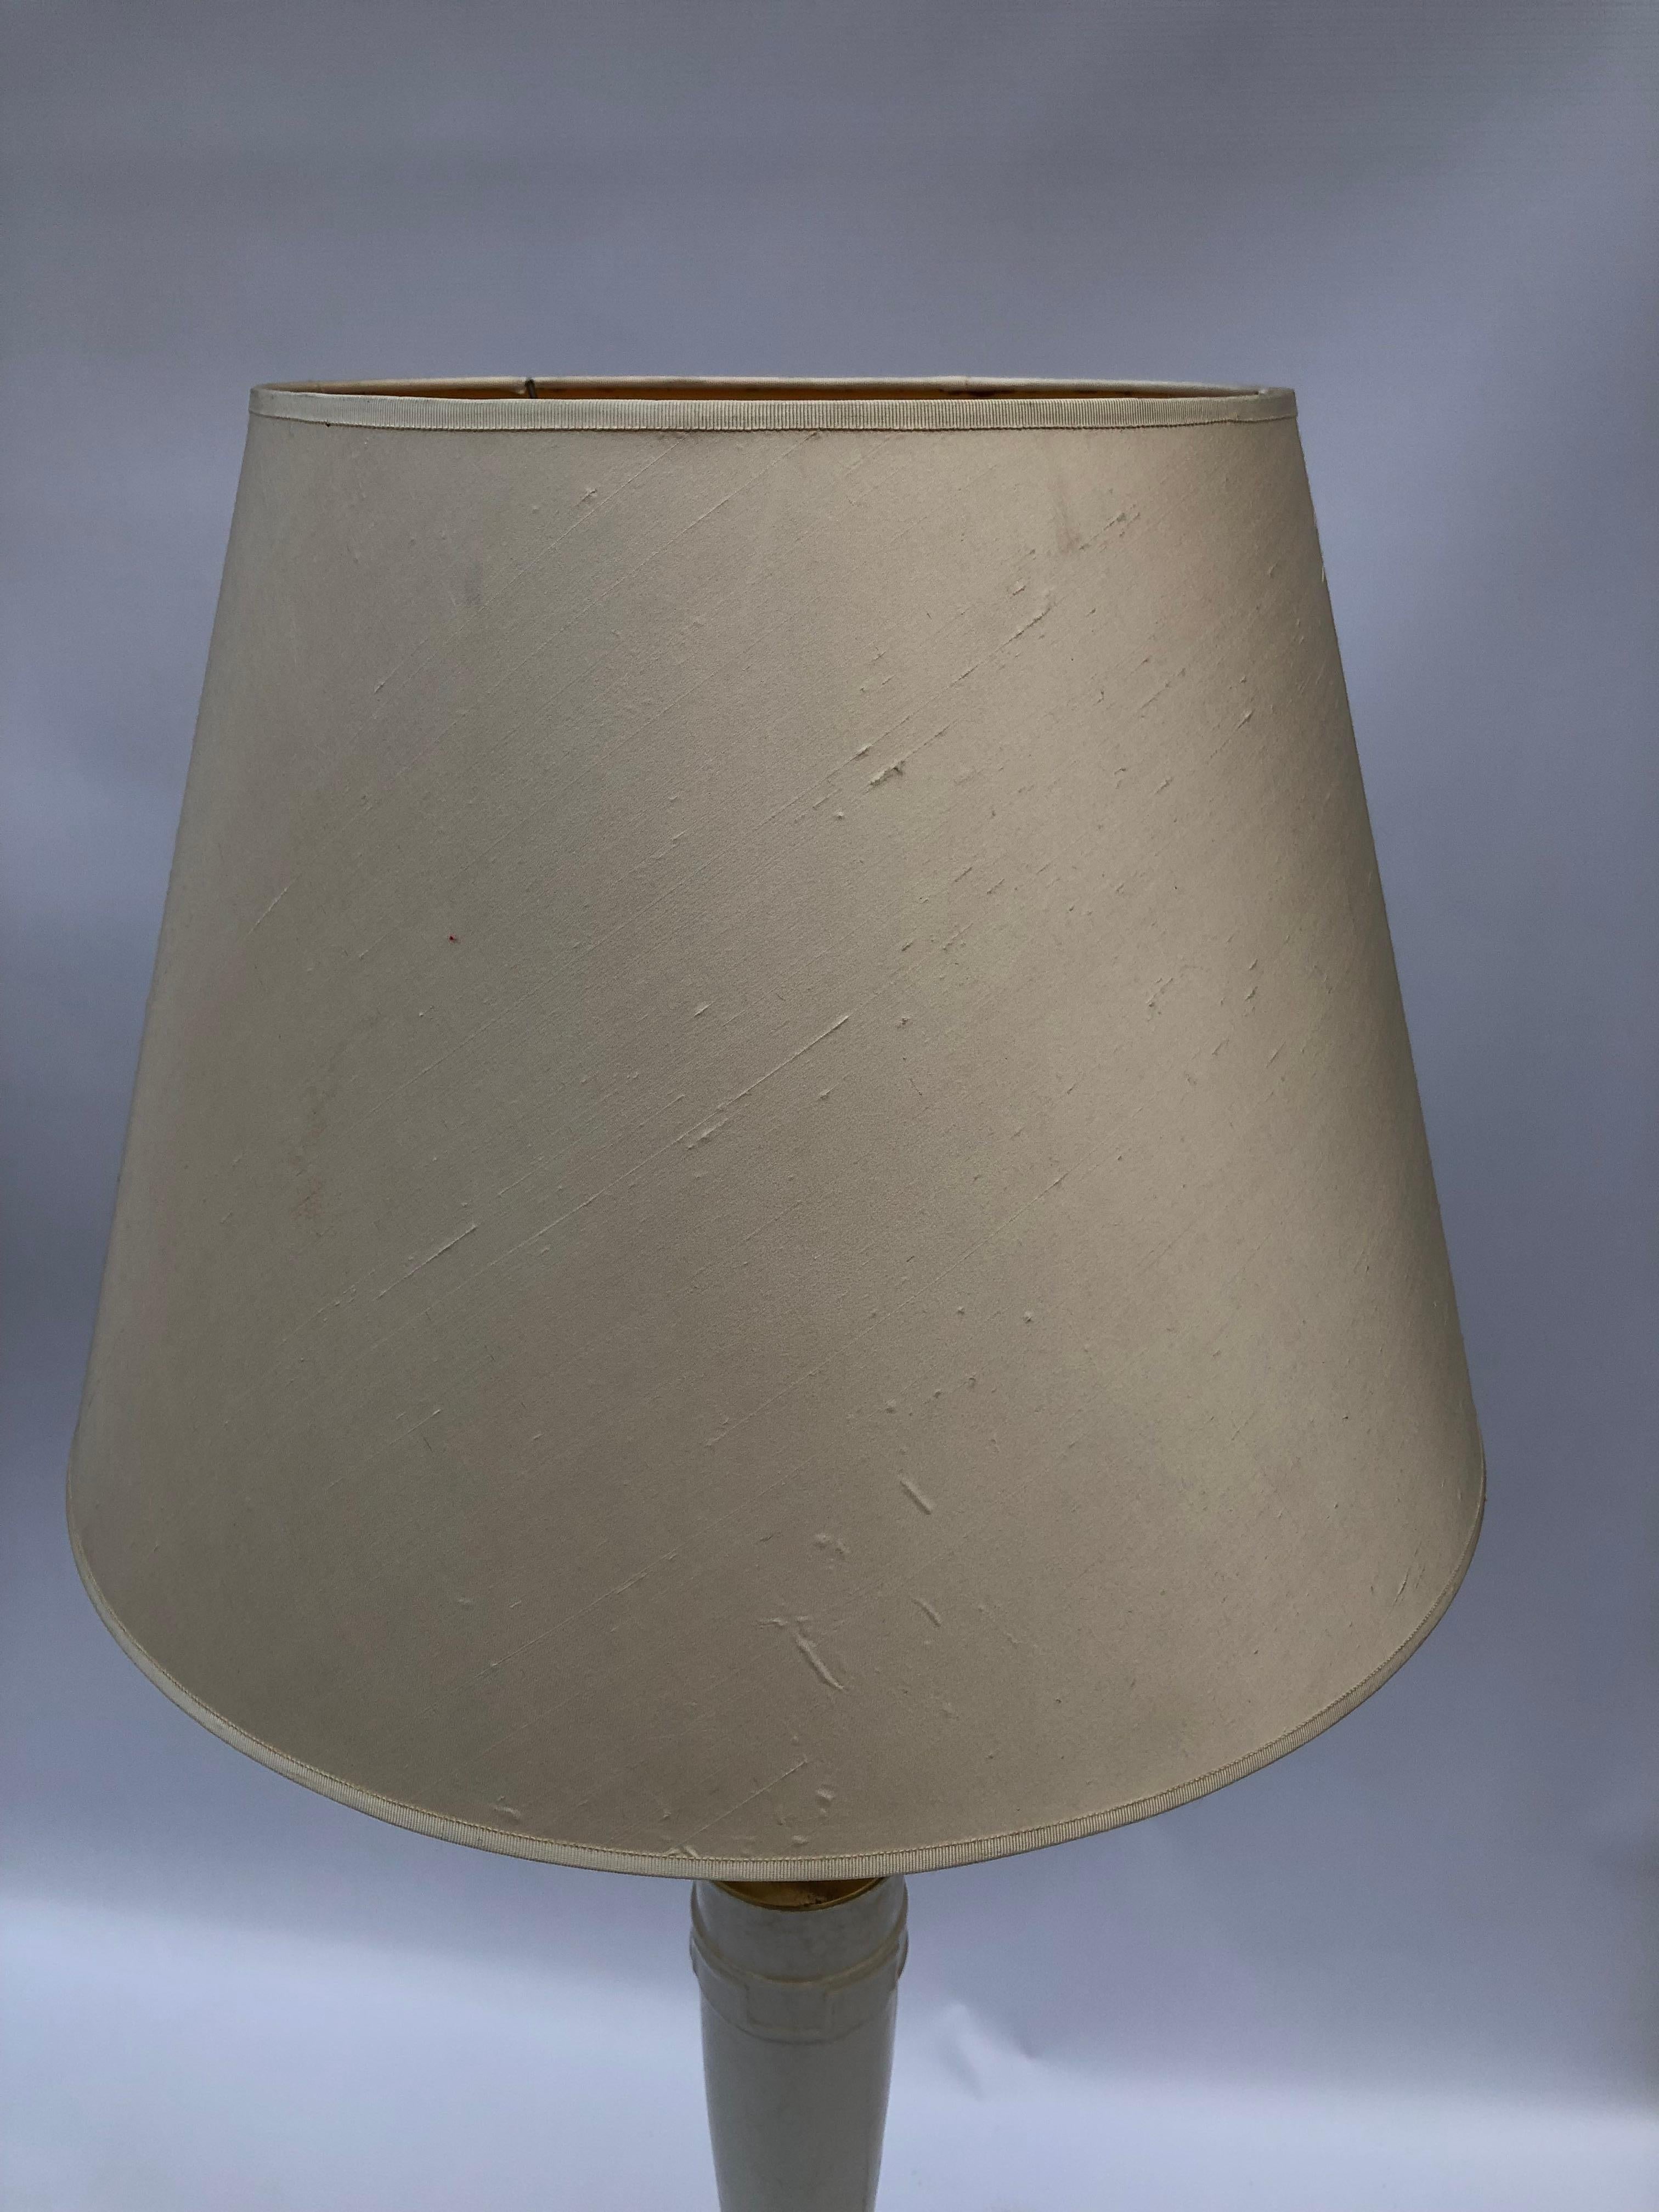 Laurel Greek Key Ceramic Brass Table Lamps 1970s Hollywood Regency Neoclassical For Sale 8